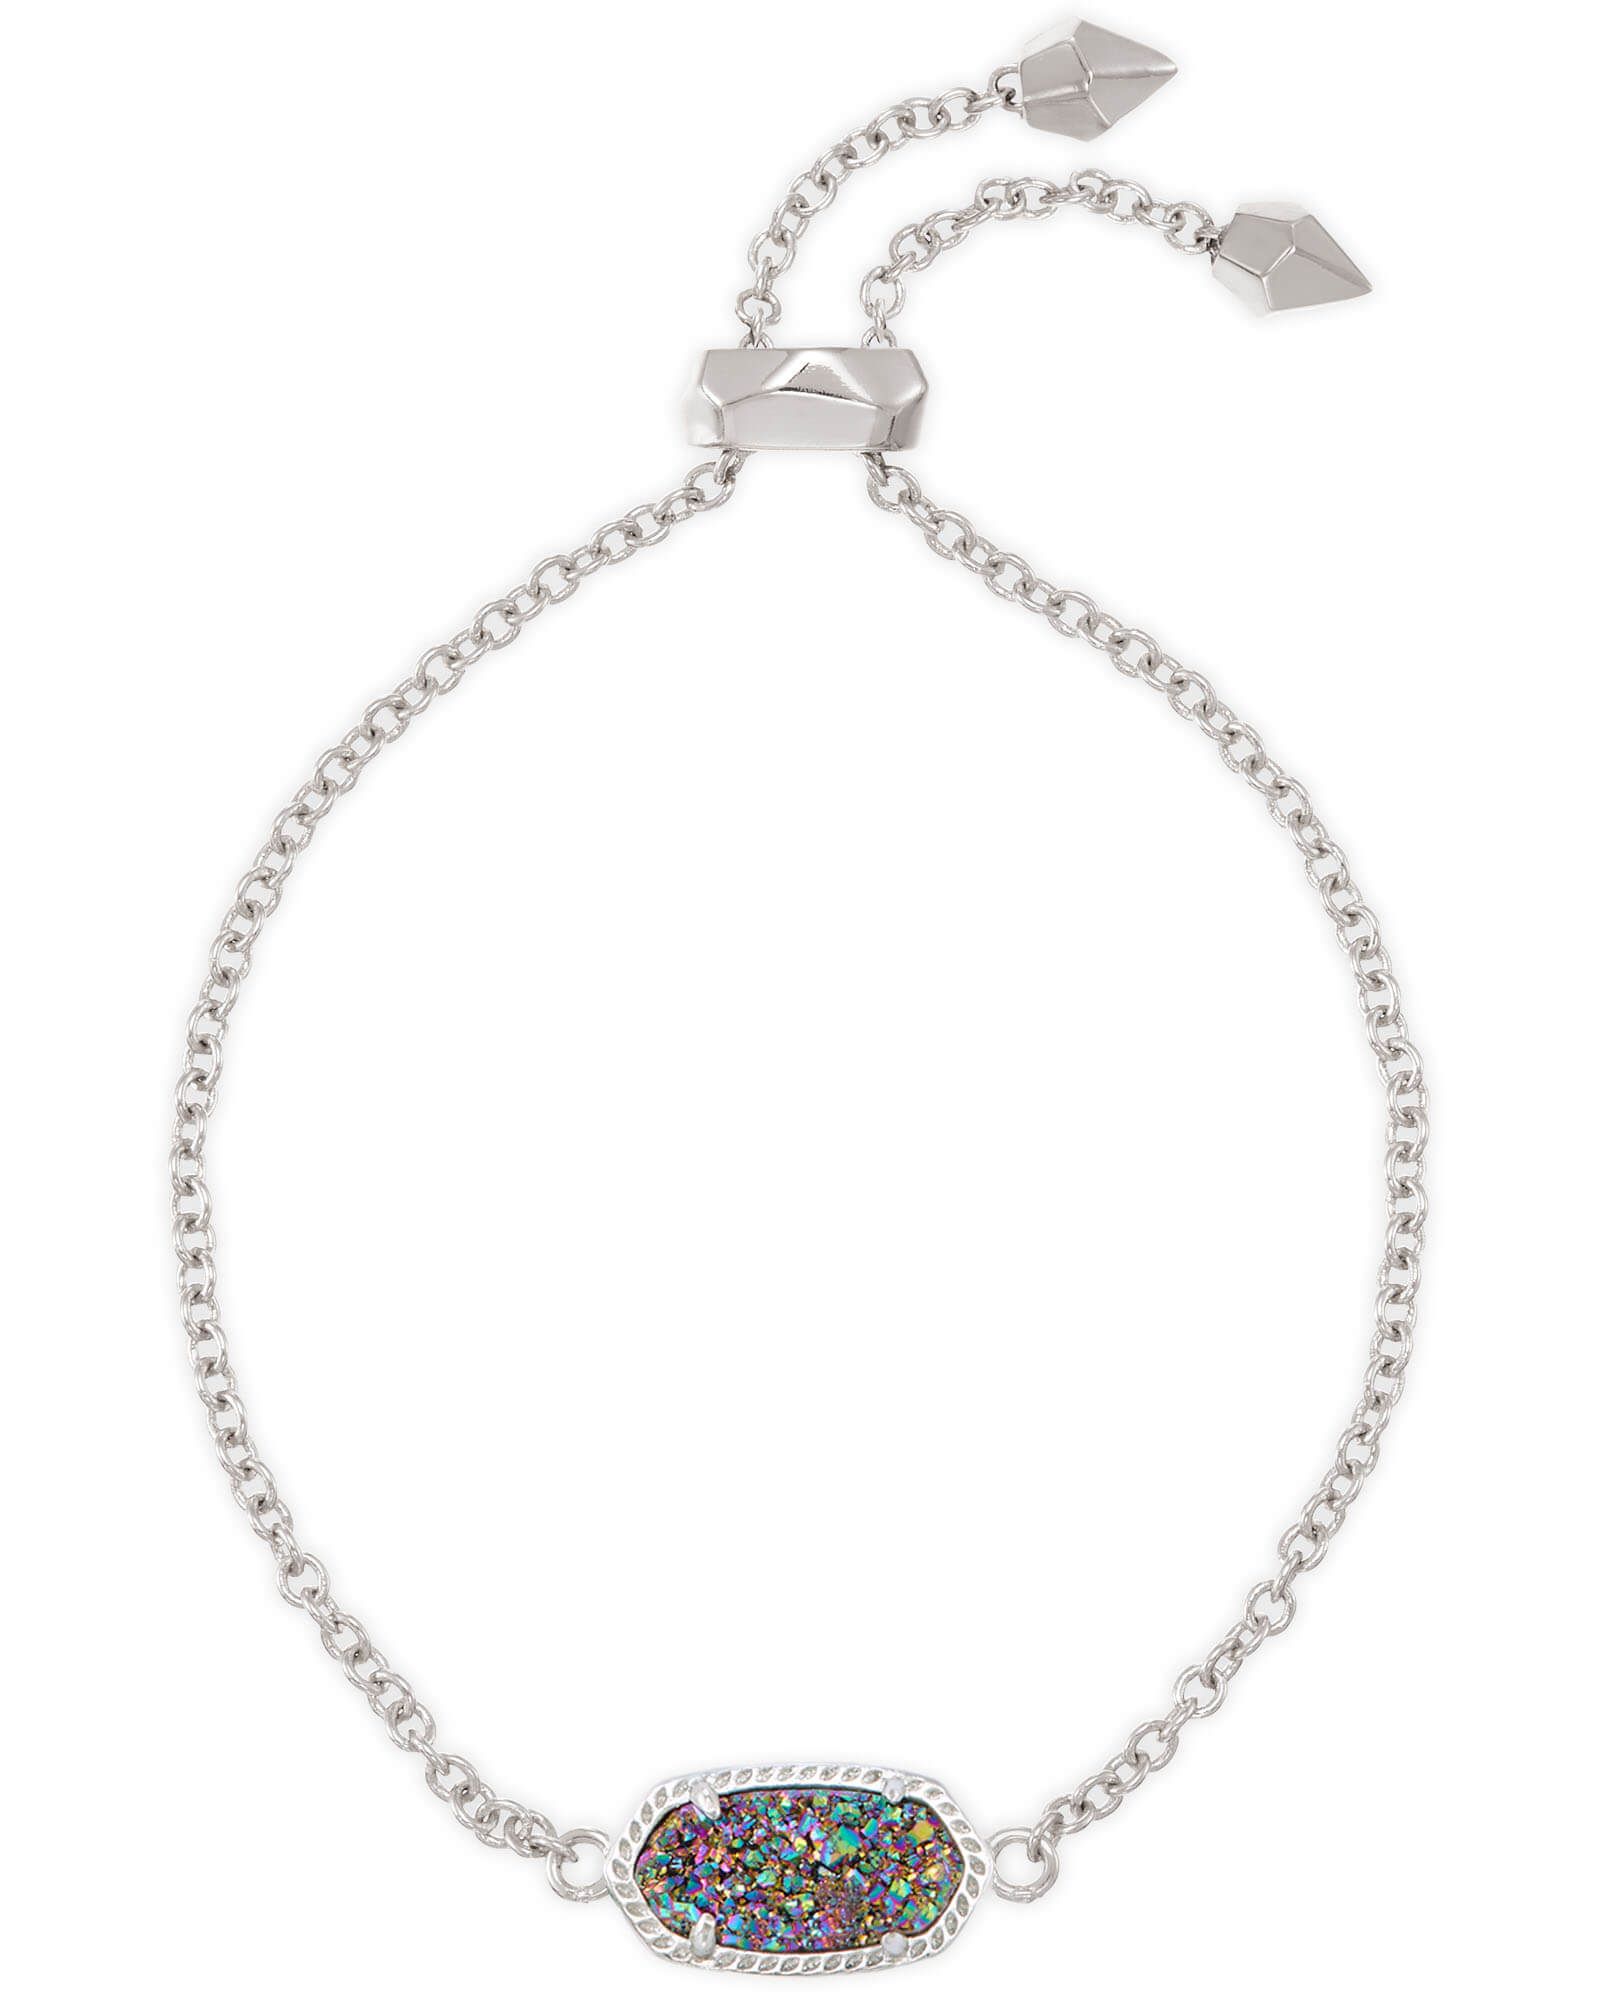 Elaina Silver Adjustable Chain Bracelet in Multicolor Drusy | Kendra Scott